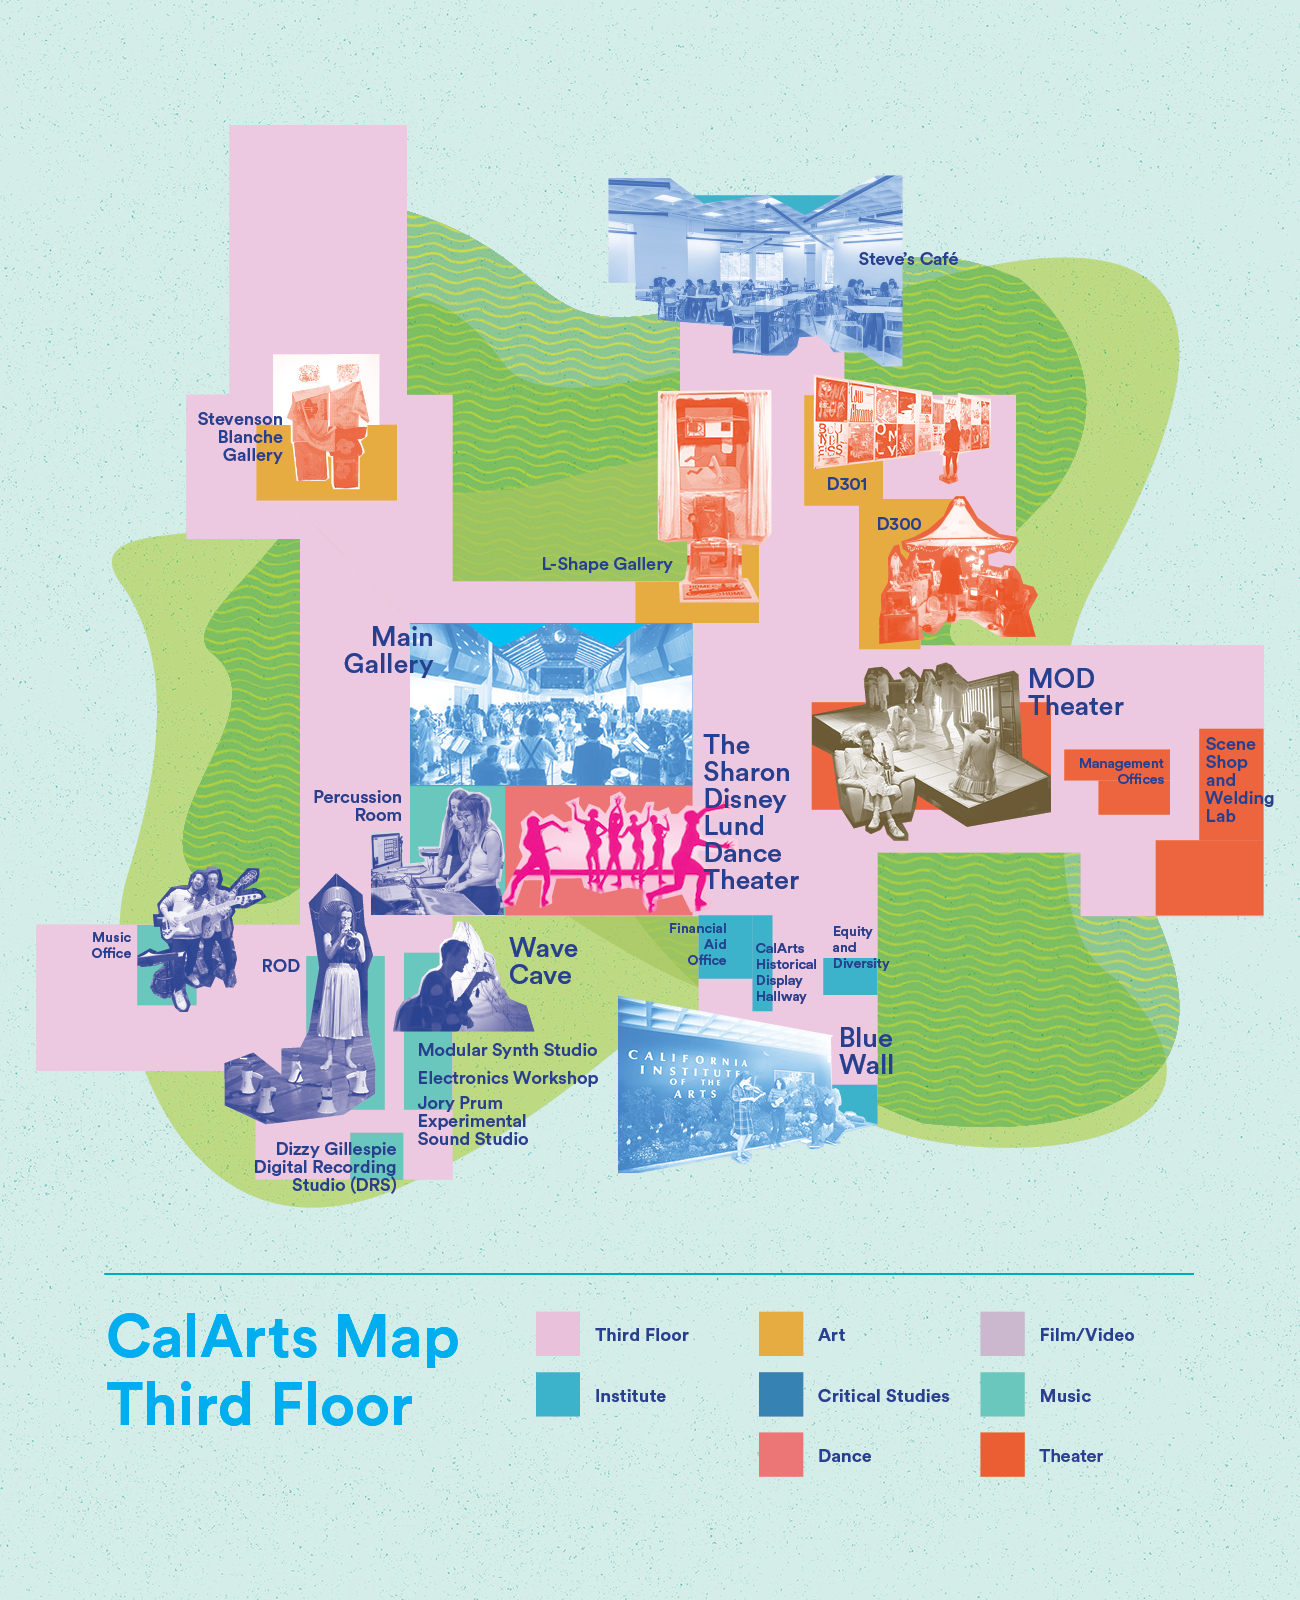 Map of the CalArts Third Floor